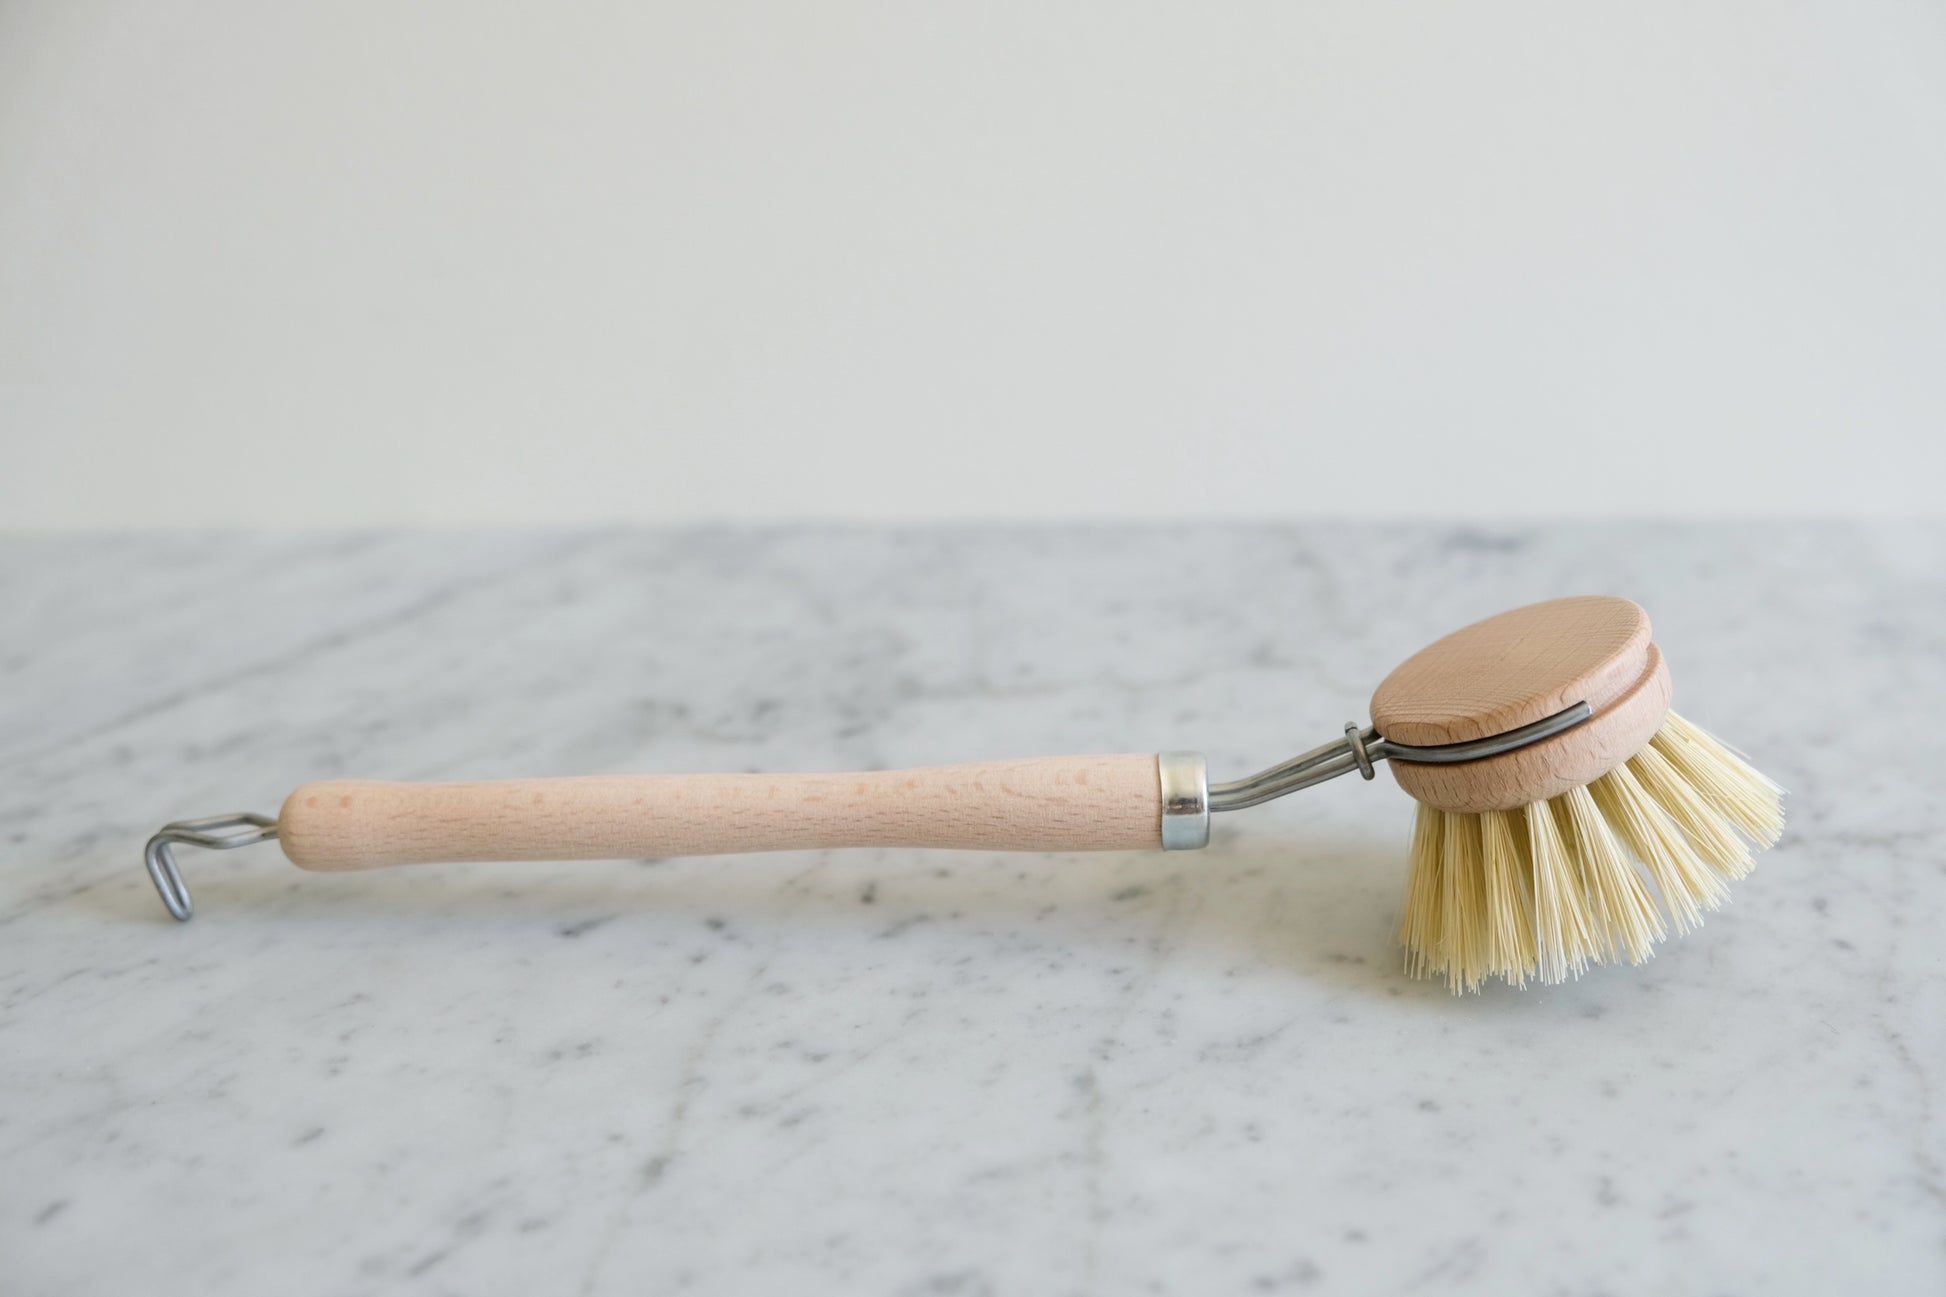 Shop Zero-Waste Dish Brush - Beechwood Dish Brush With Handle